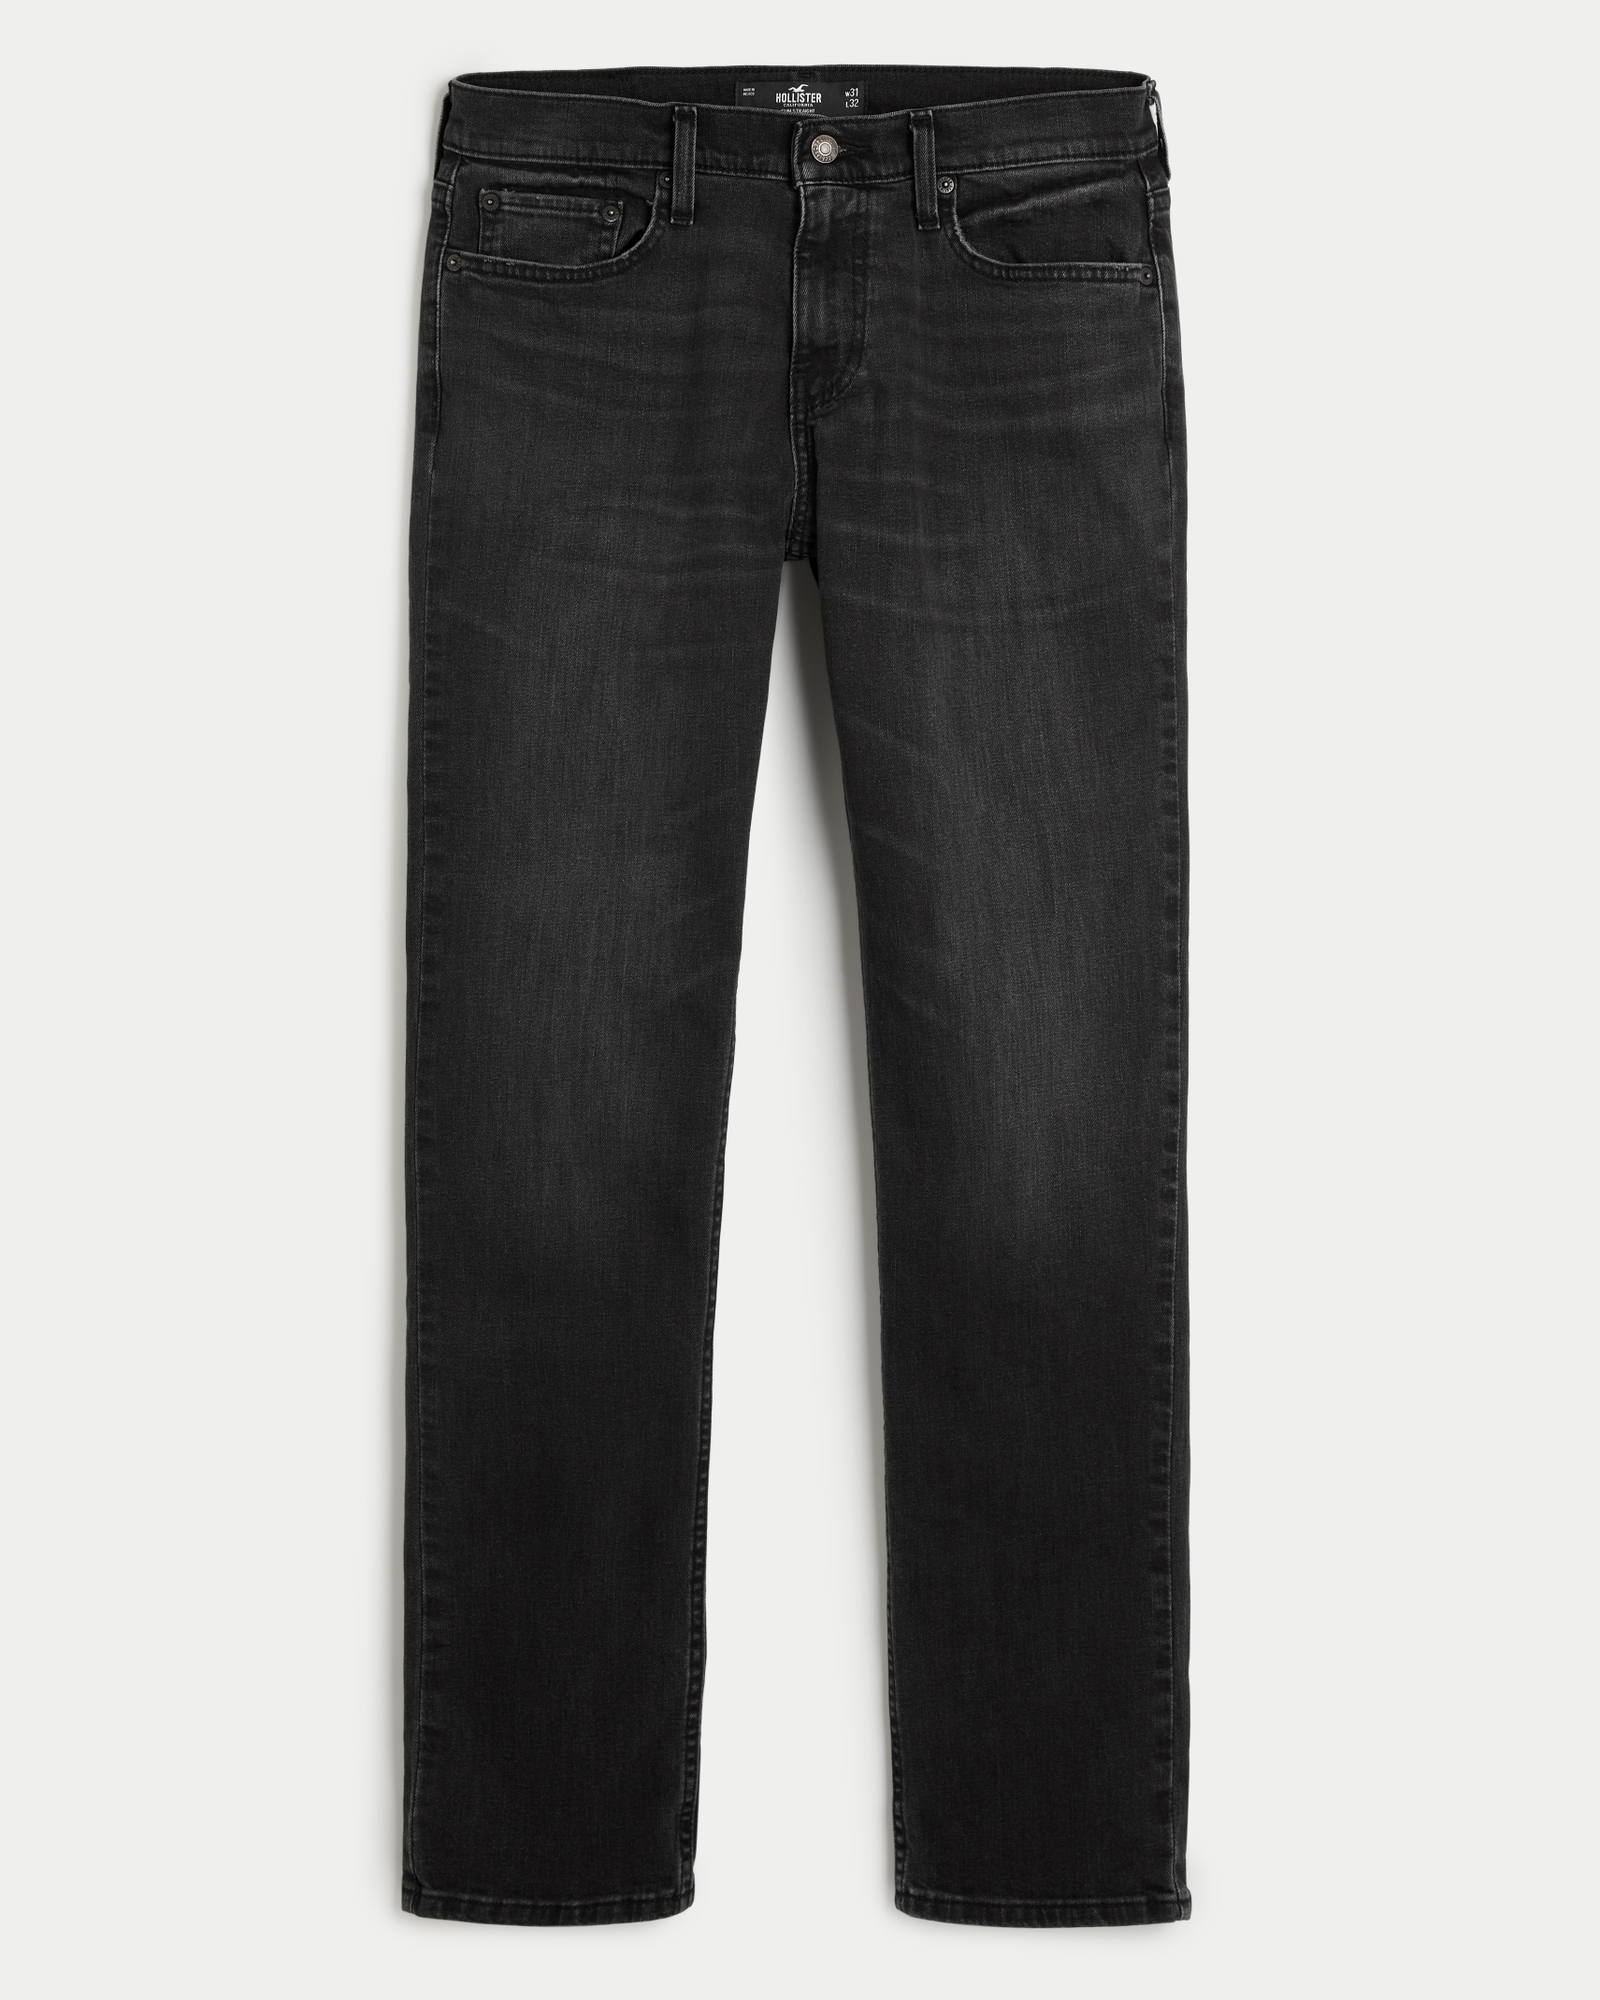 Men's Black Slim Straight Jeans, Men's Clearance